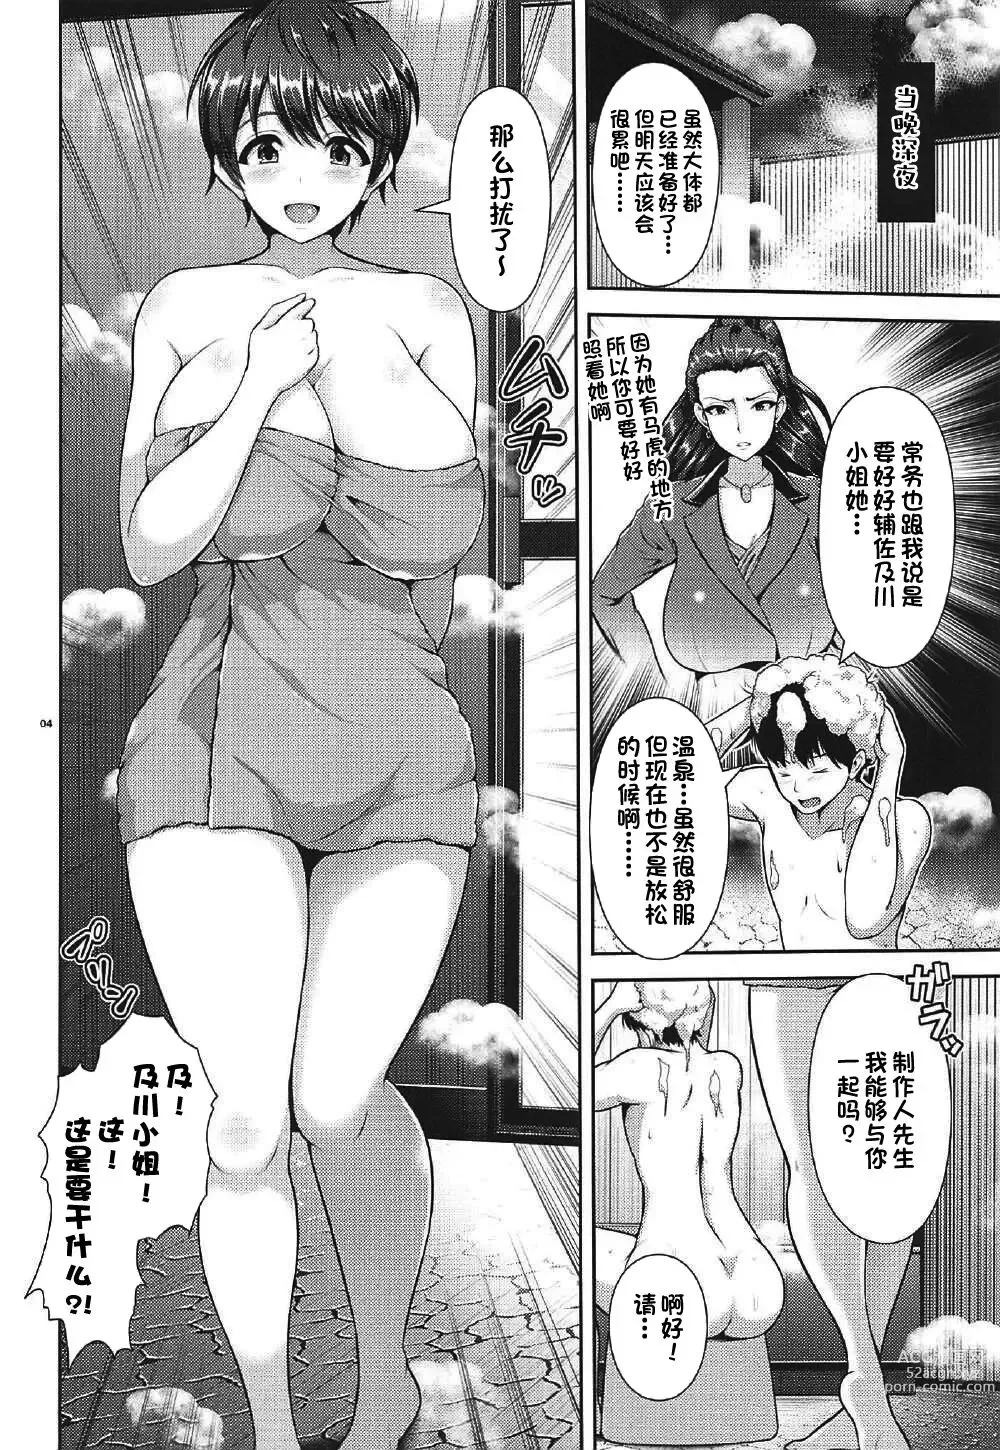 Page 3 of doujinshi Oikawa-san no Oppai Iyashi